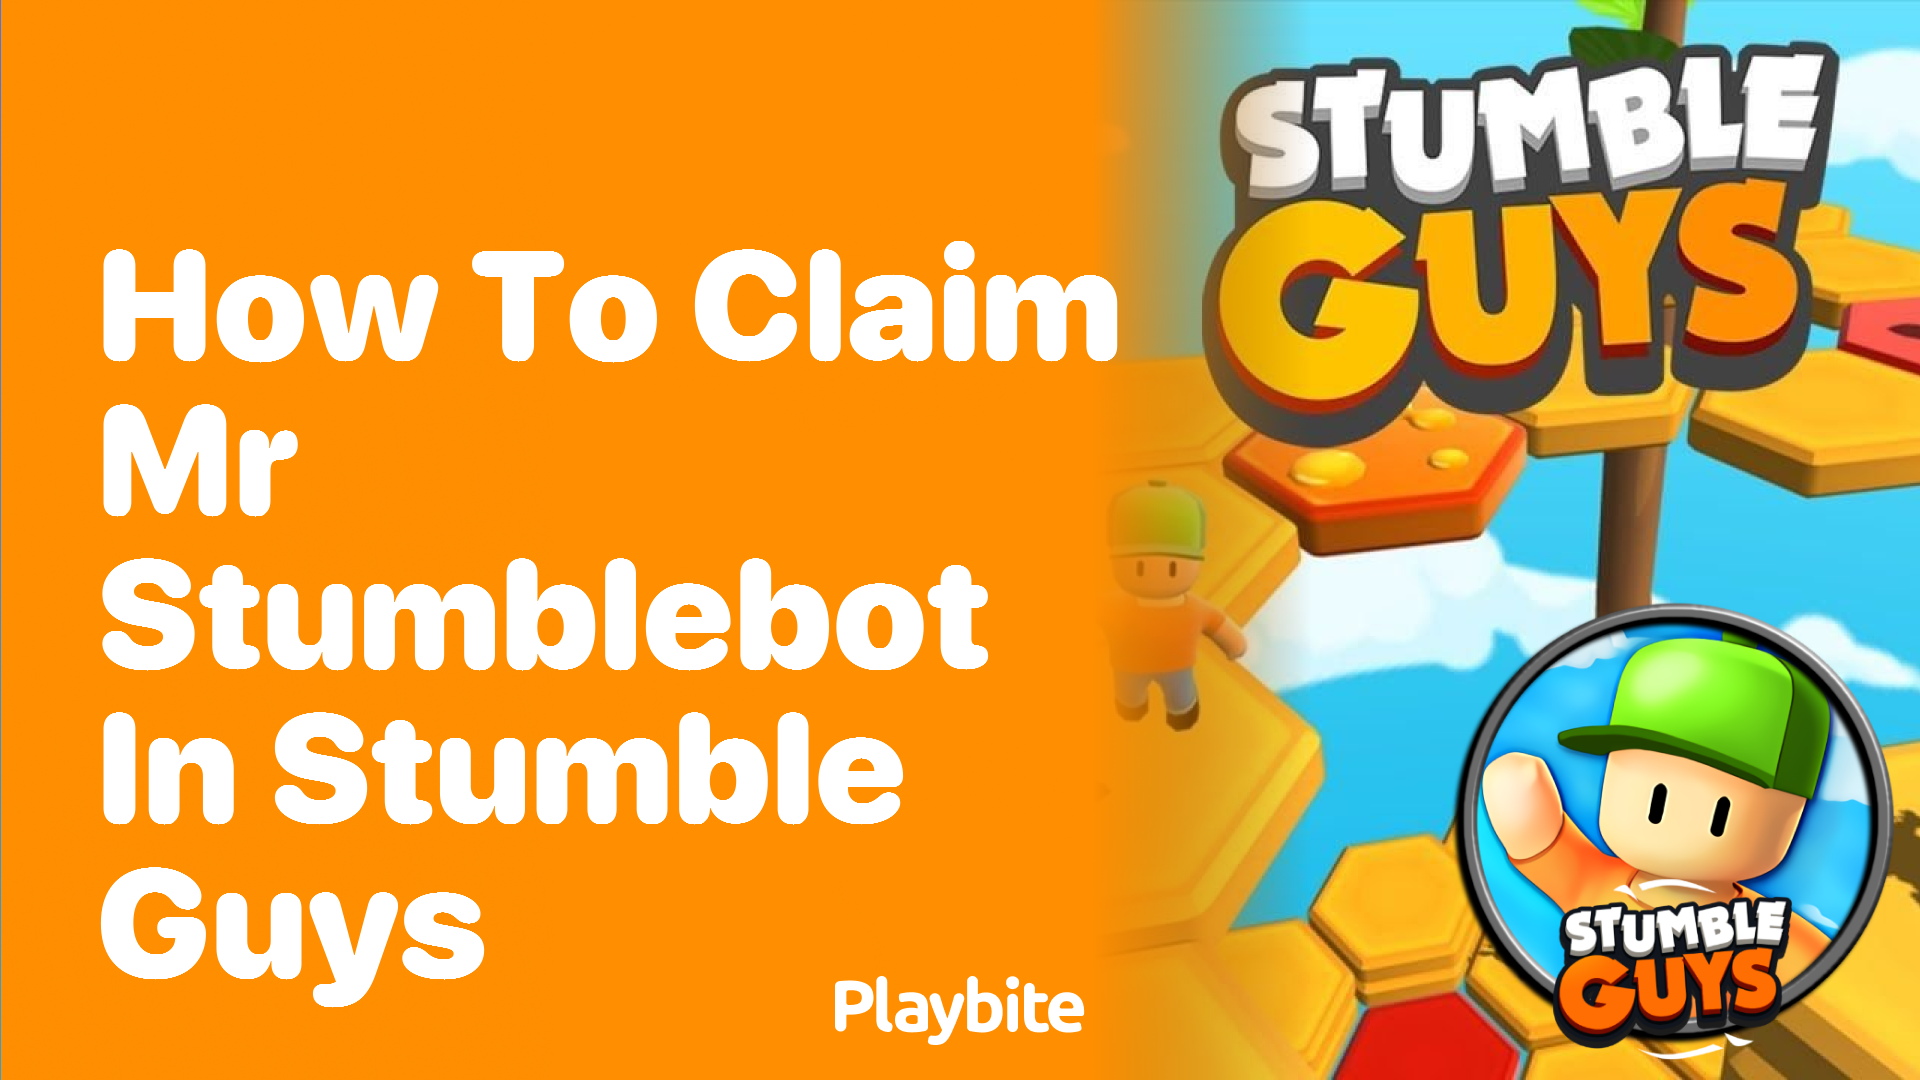 How to Claim Mr. Stumblebot in Stumble Guys